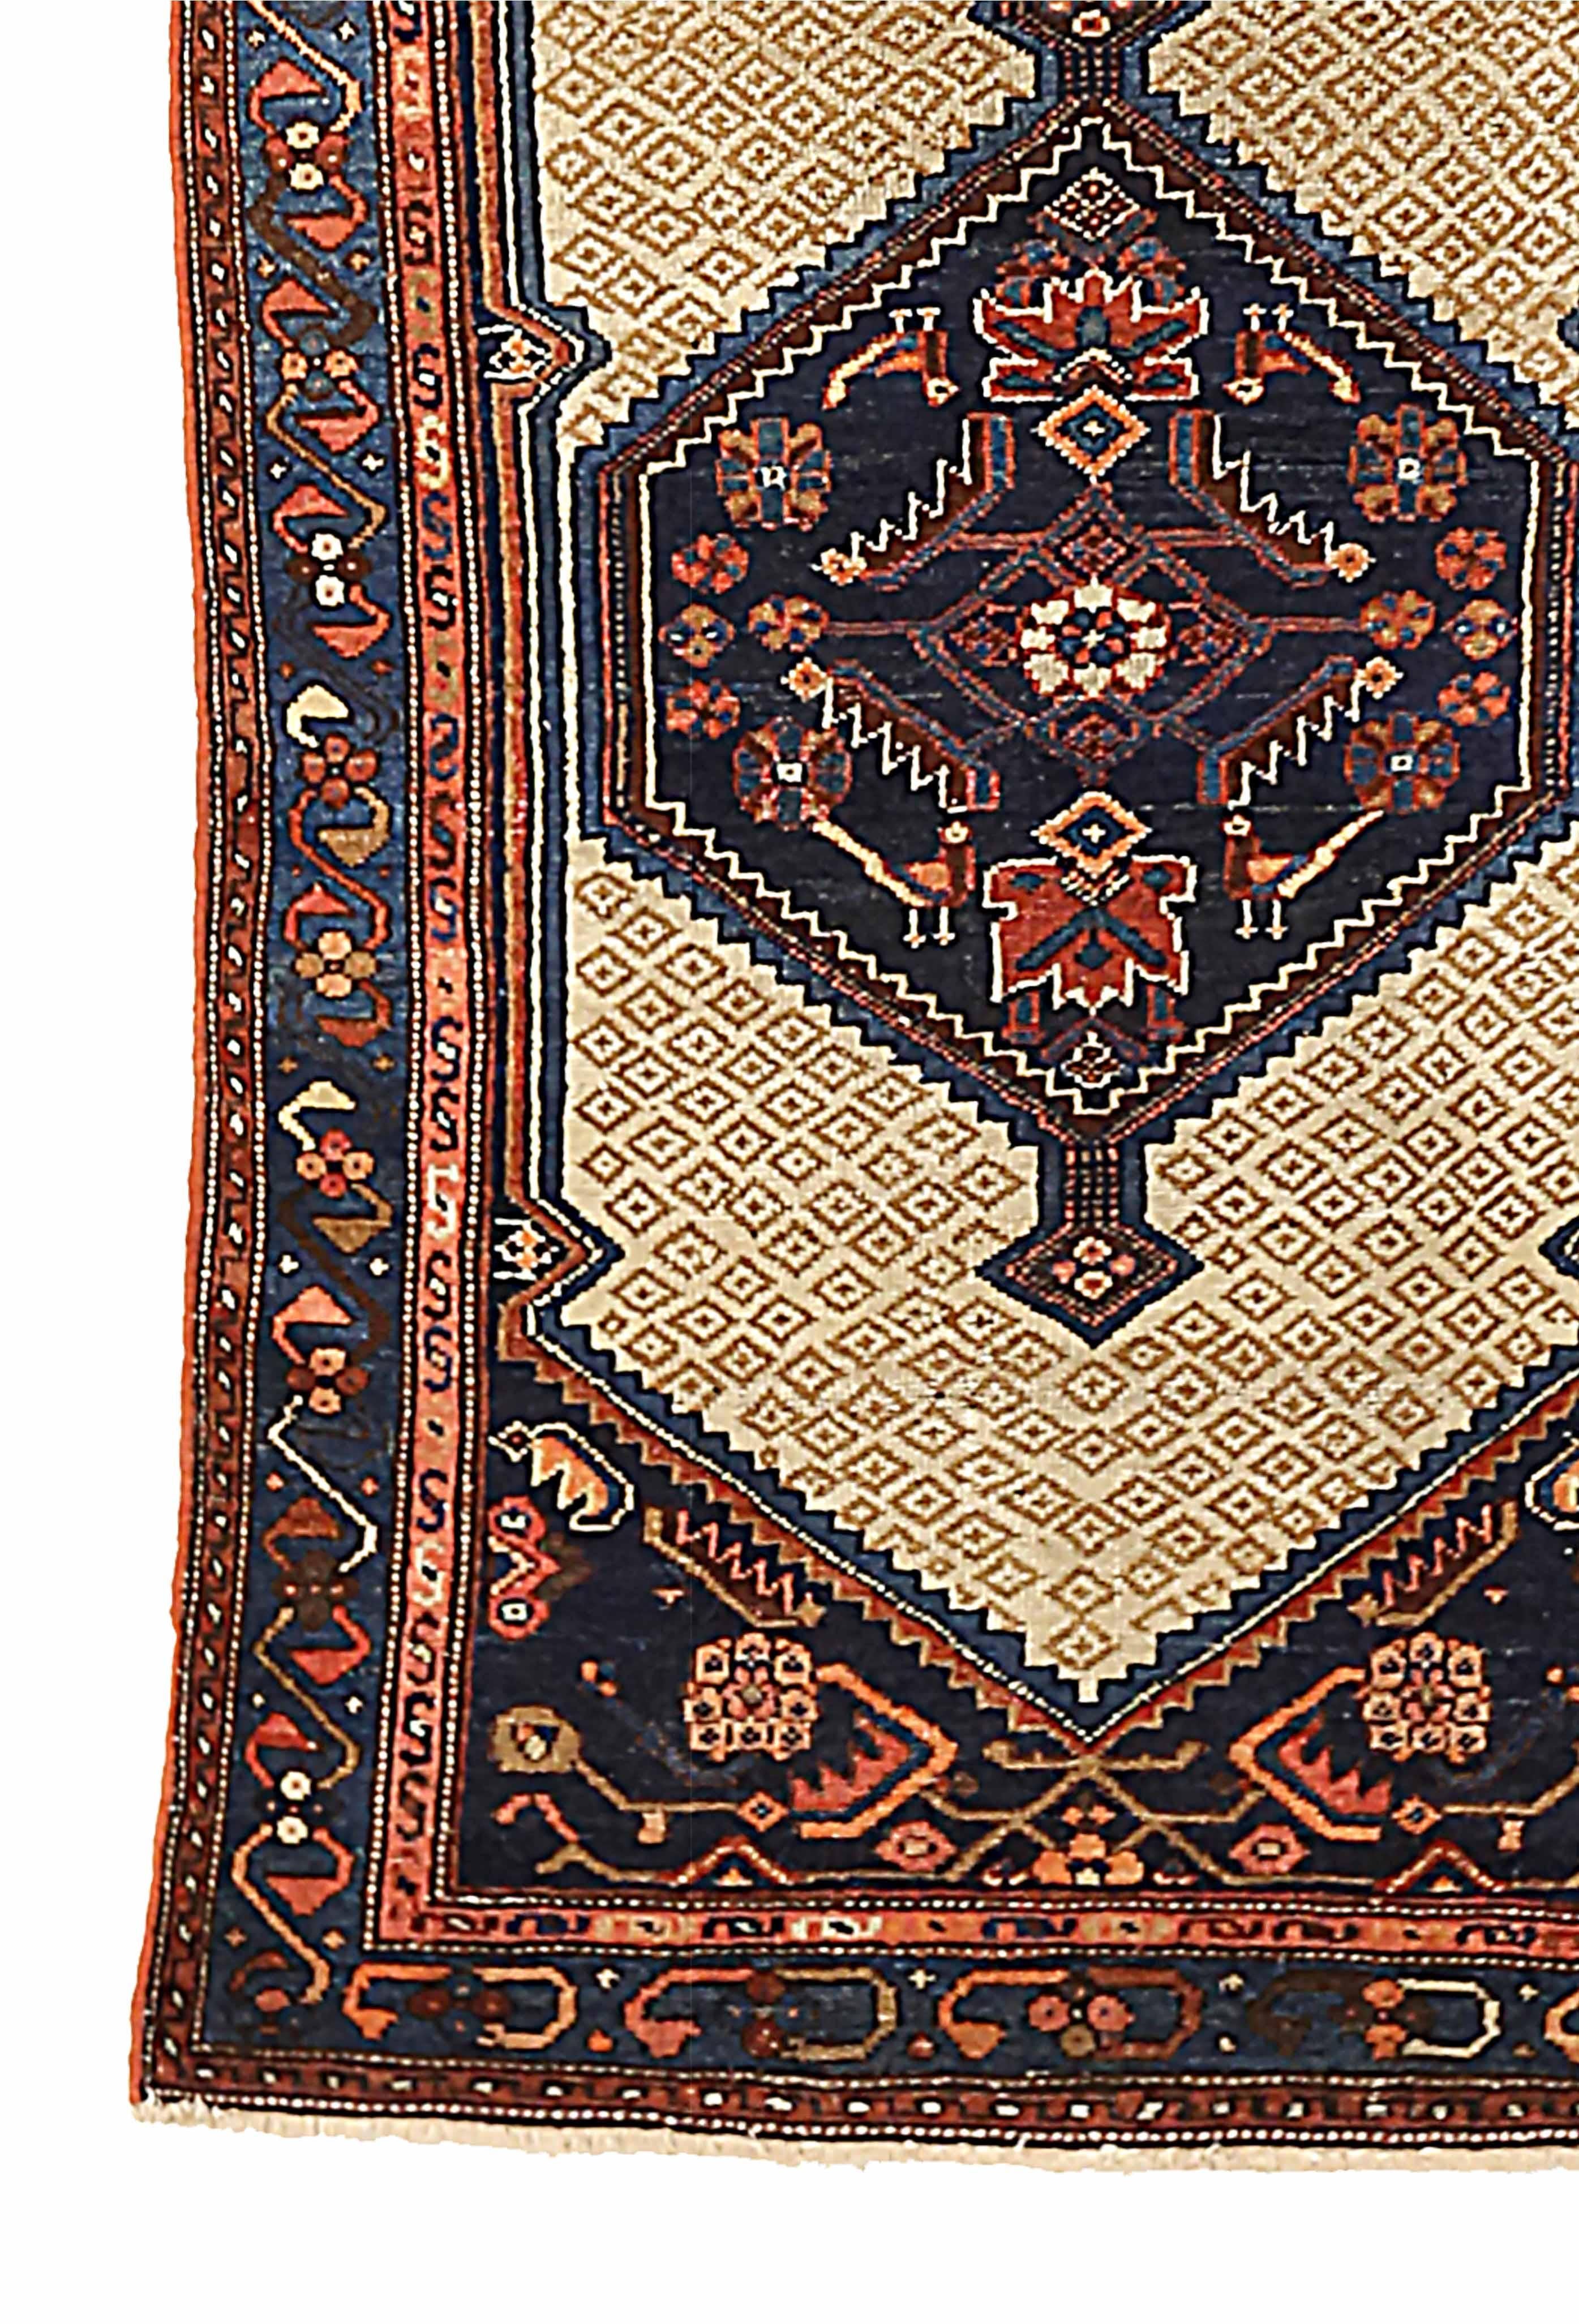 Other  Antique Persian Area Rug Zanjan Design For Sale